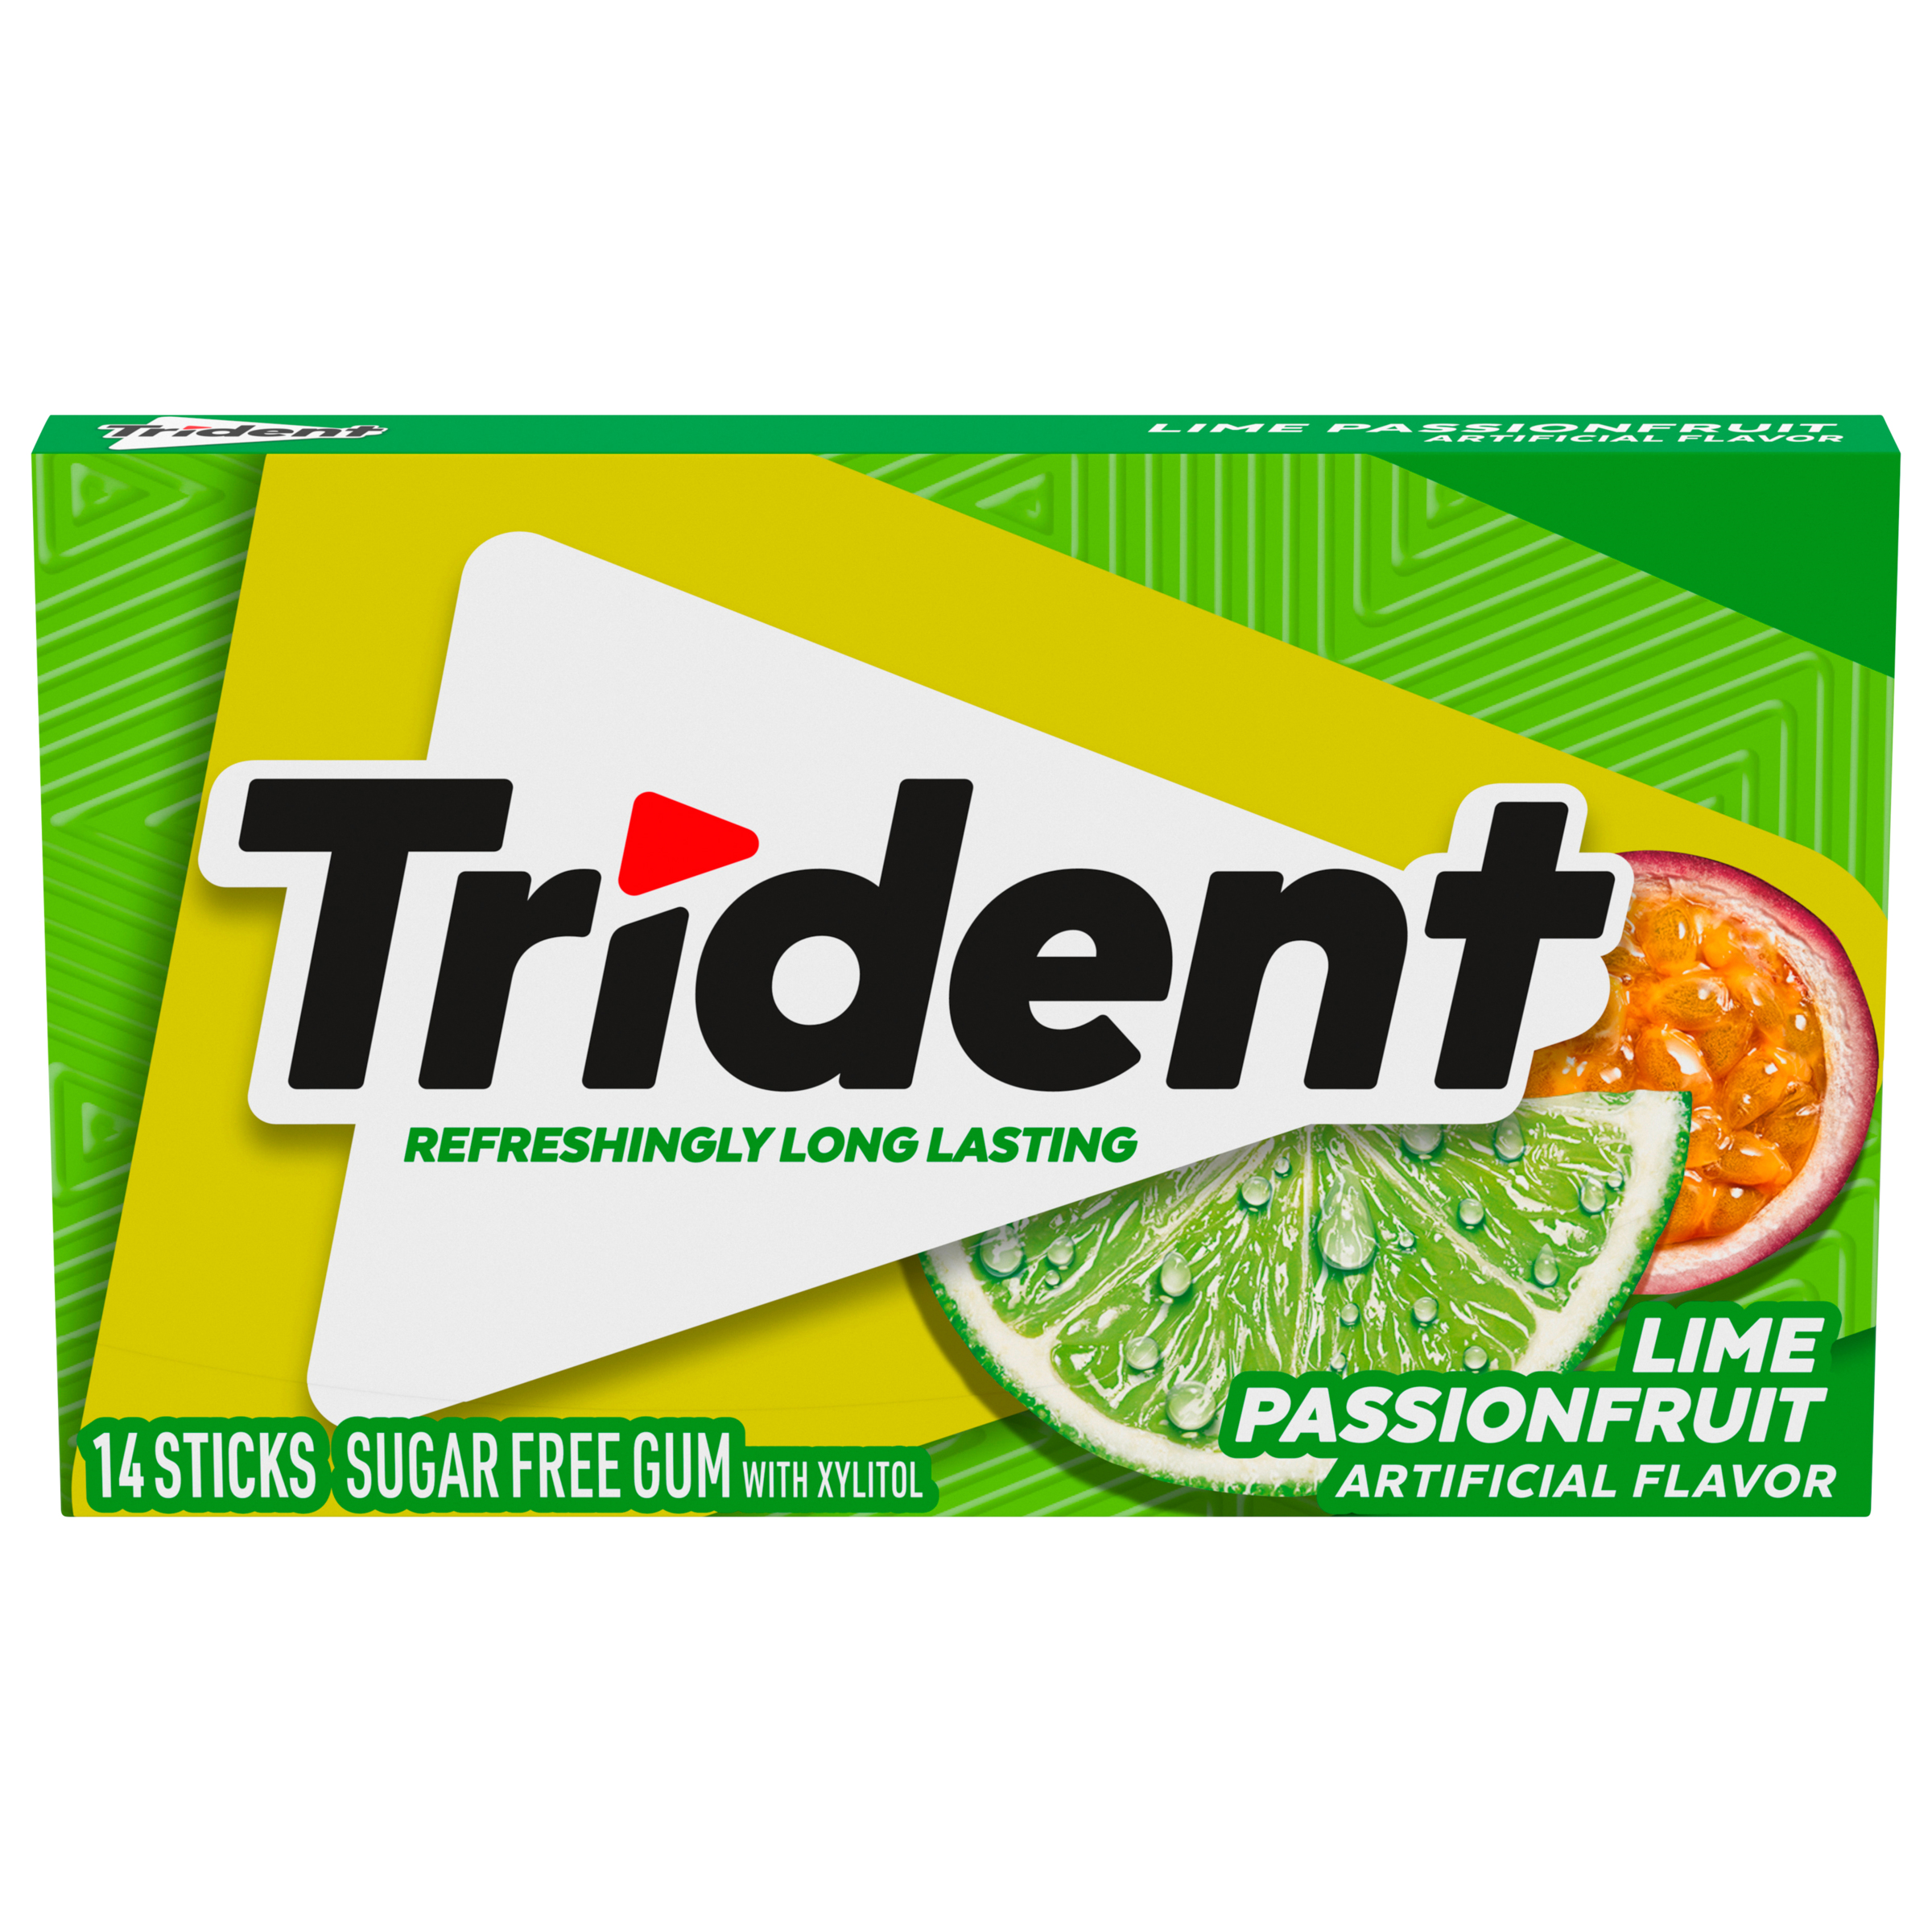 TRIDENT Lime Passion Fruit Twist Sugar Free Gum 14PCS 12x12